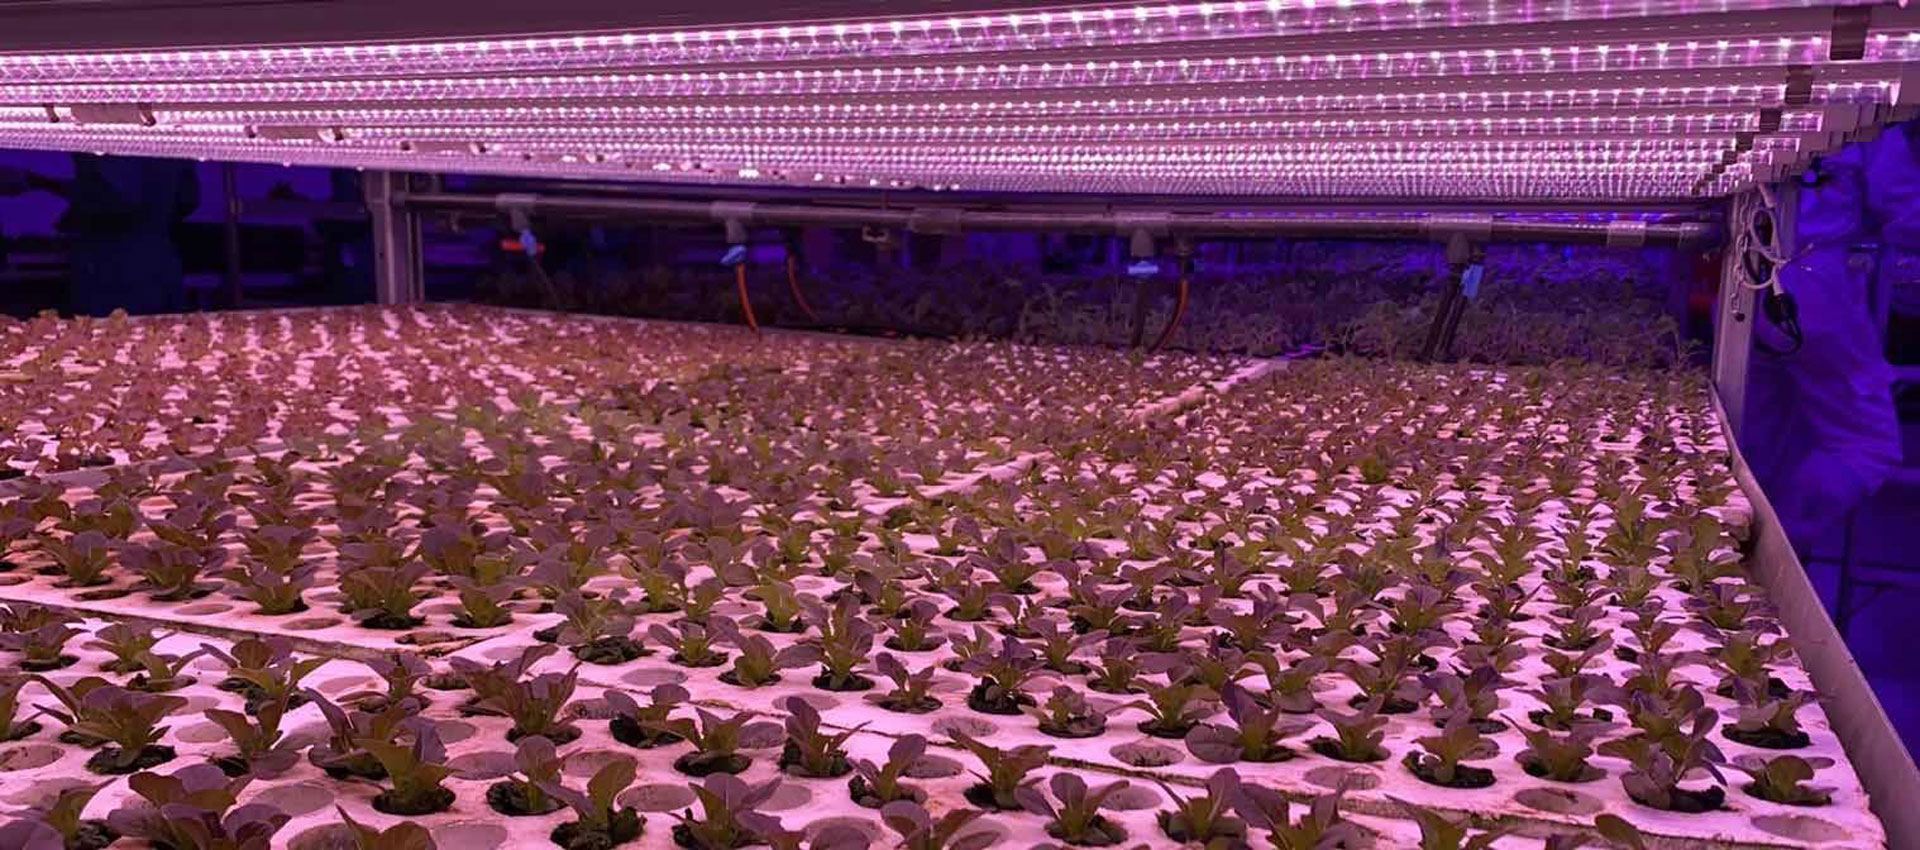 Vertical Farming & LED Grow Lights